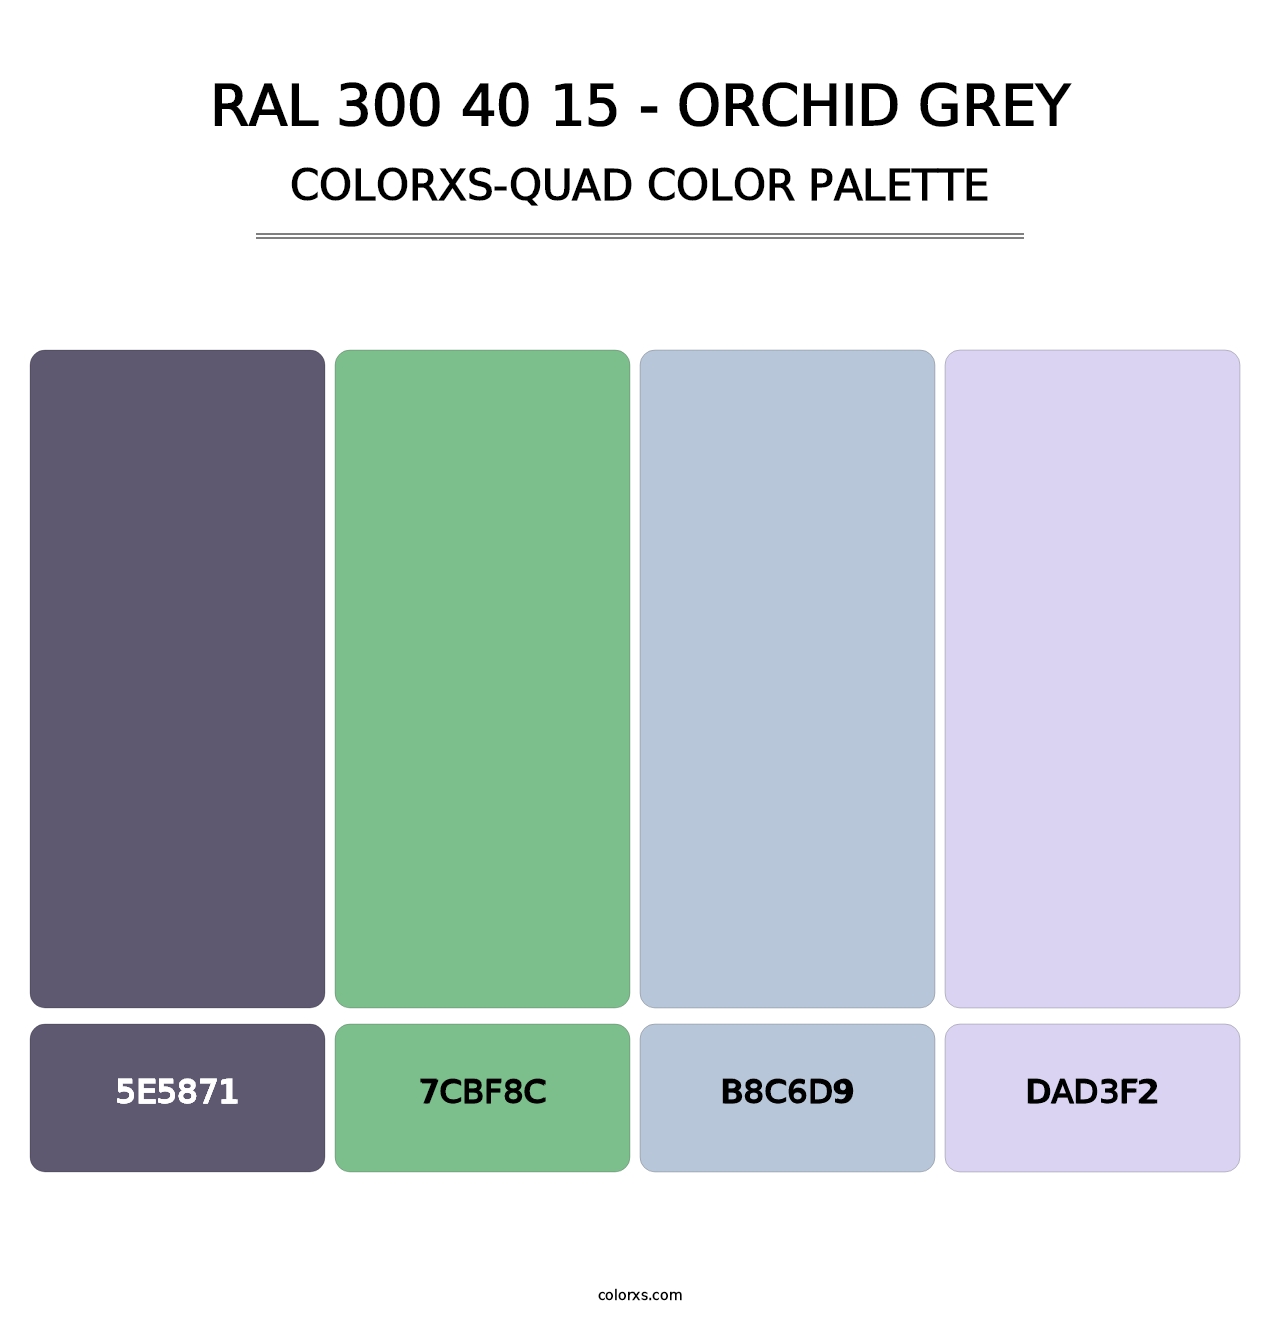 RAL 300 40 15 - Orchid Grey - Colorxs Quad Palette